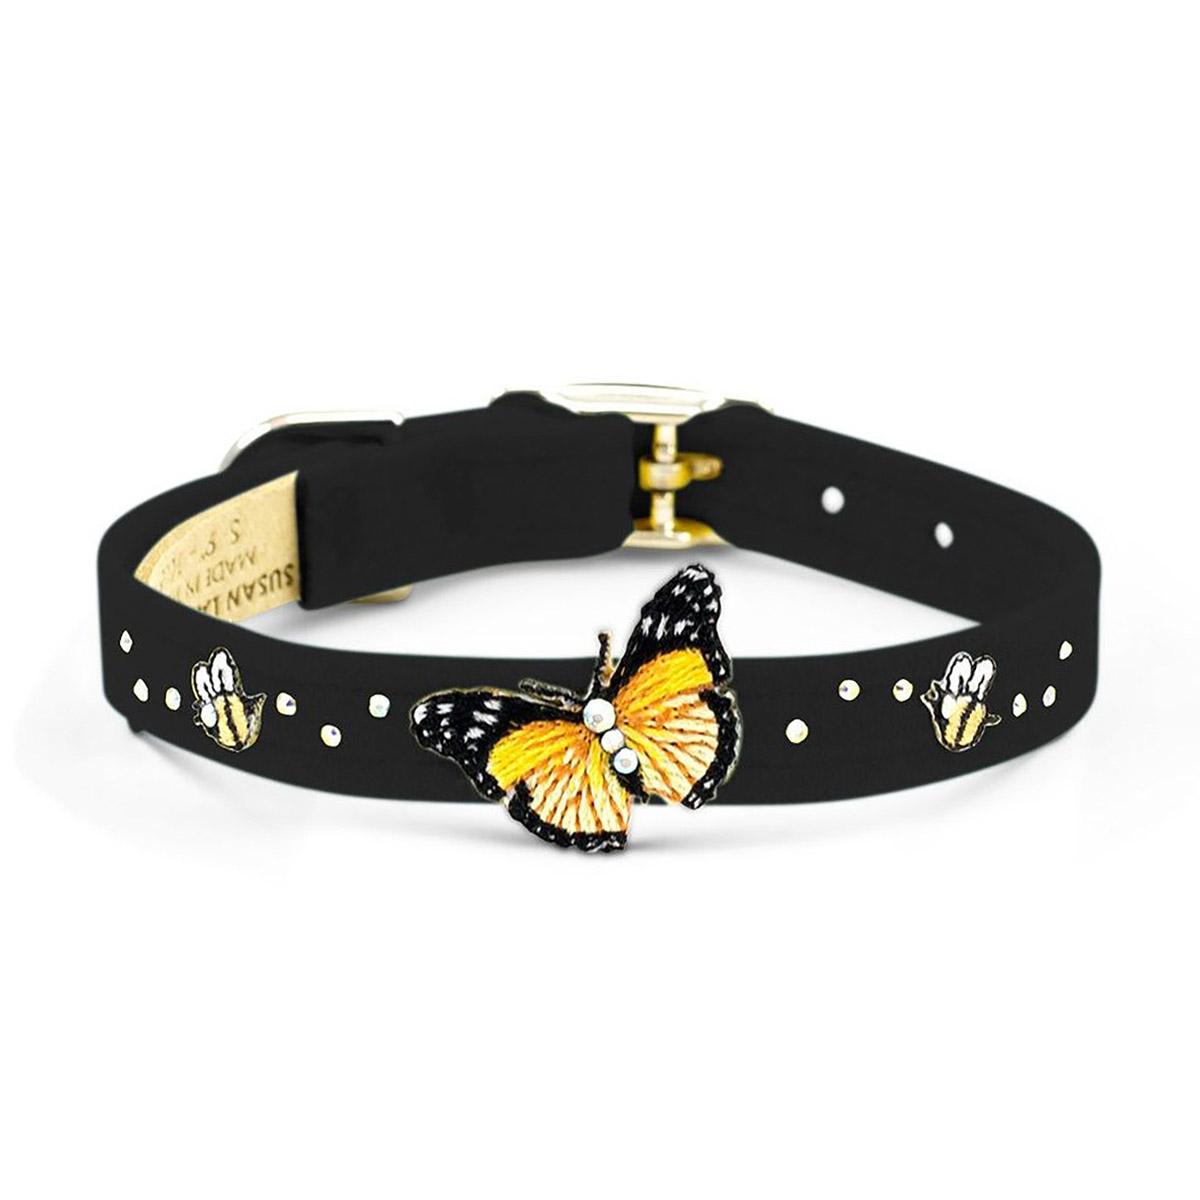 Butterflies & Bees Dog Collar by Susan Lanci - Black